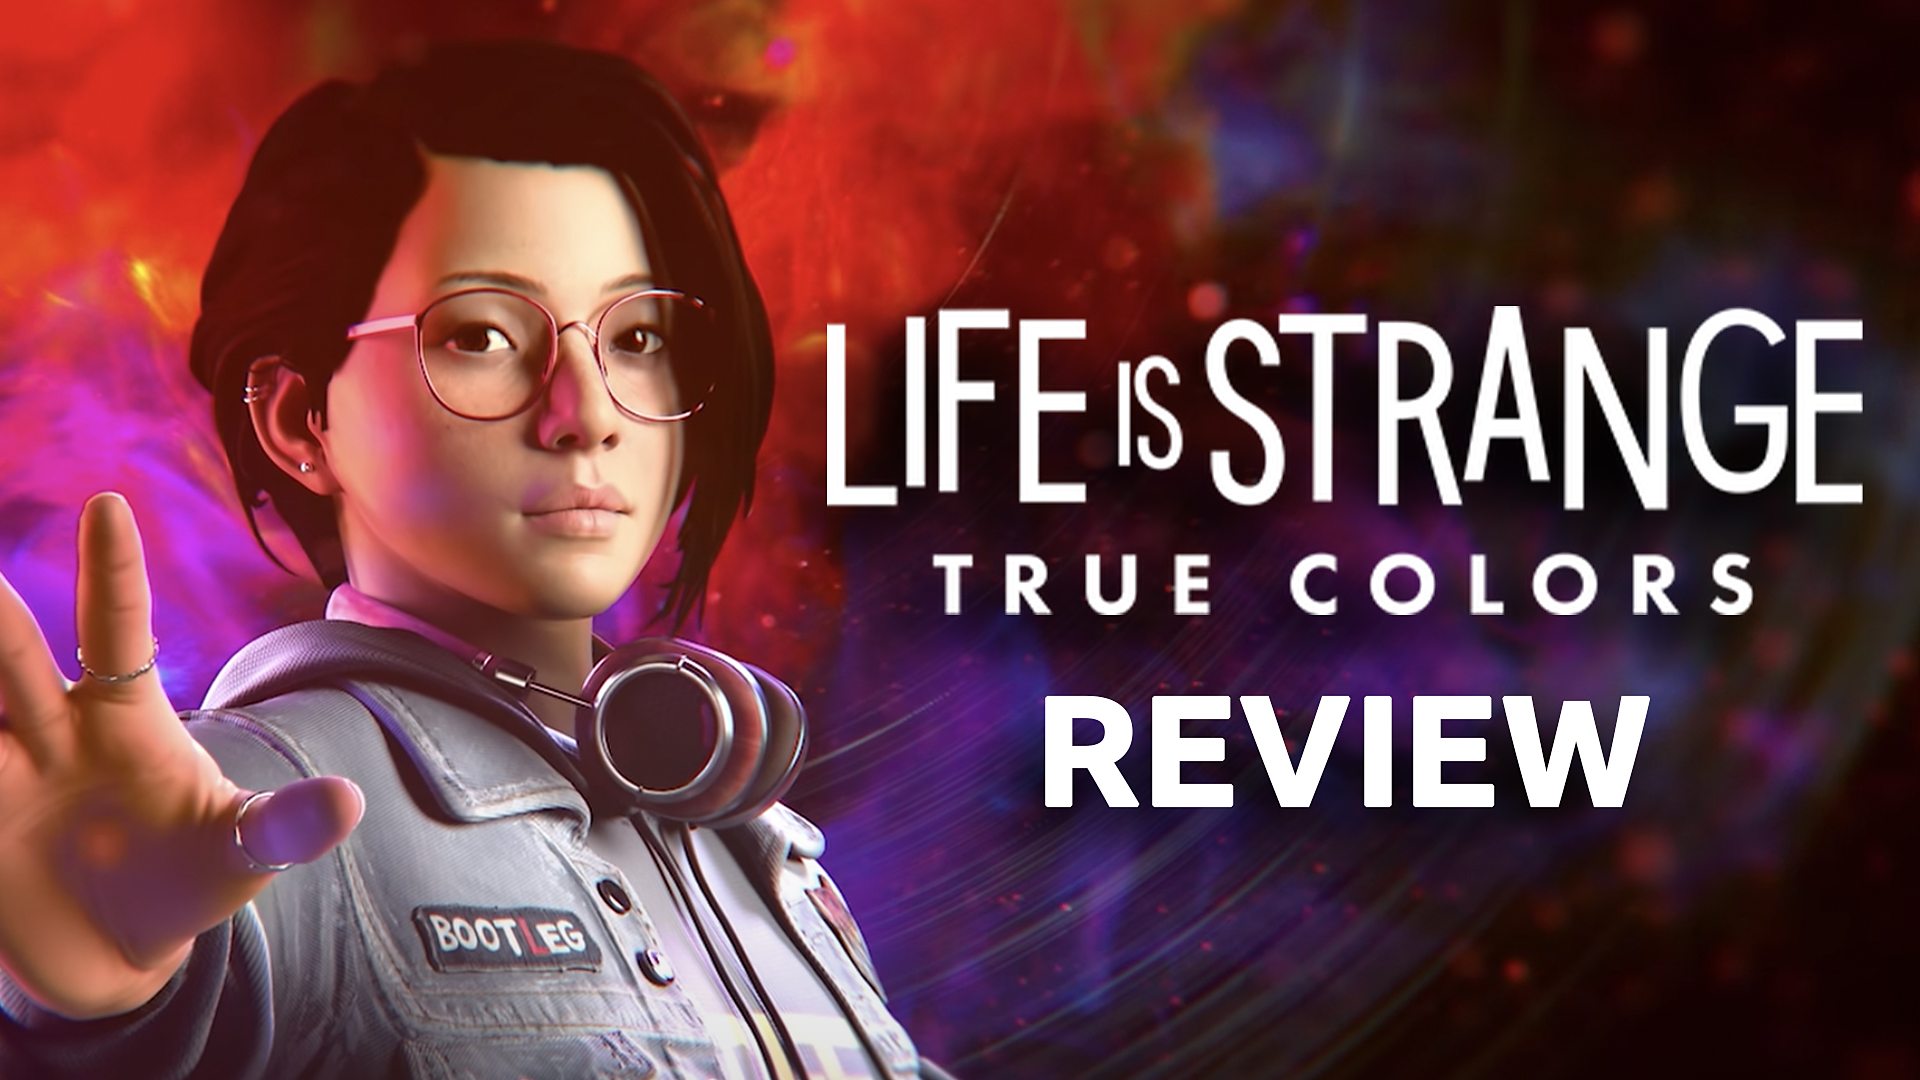 Review: Life is Strange: True Colors